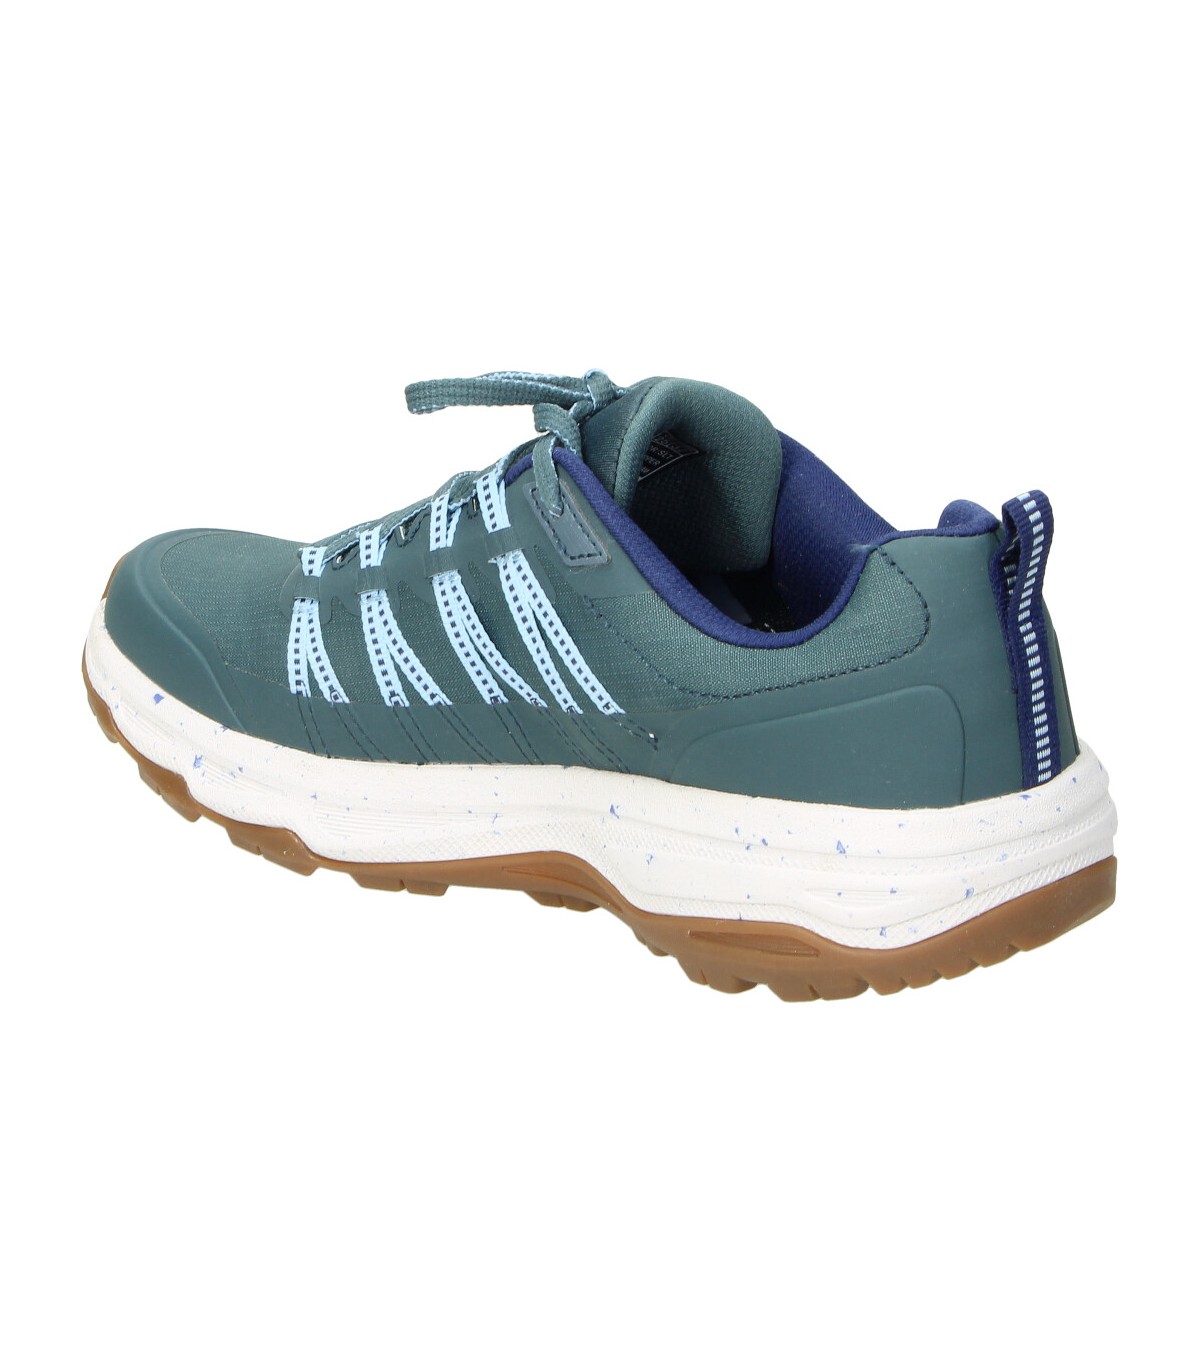 suma triste término análogo Zapatillas azules para mujer Skechers Go Run Trail Altitude River